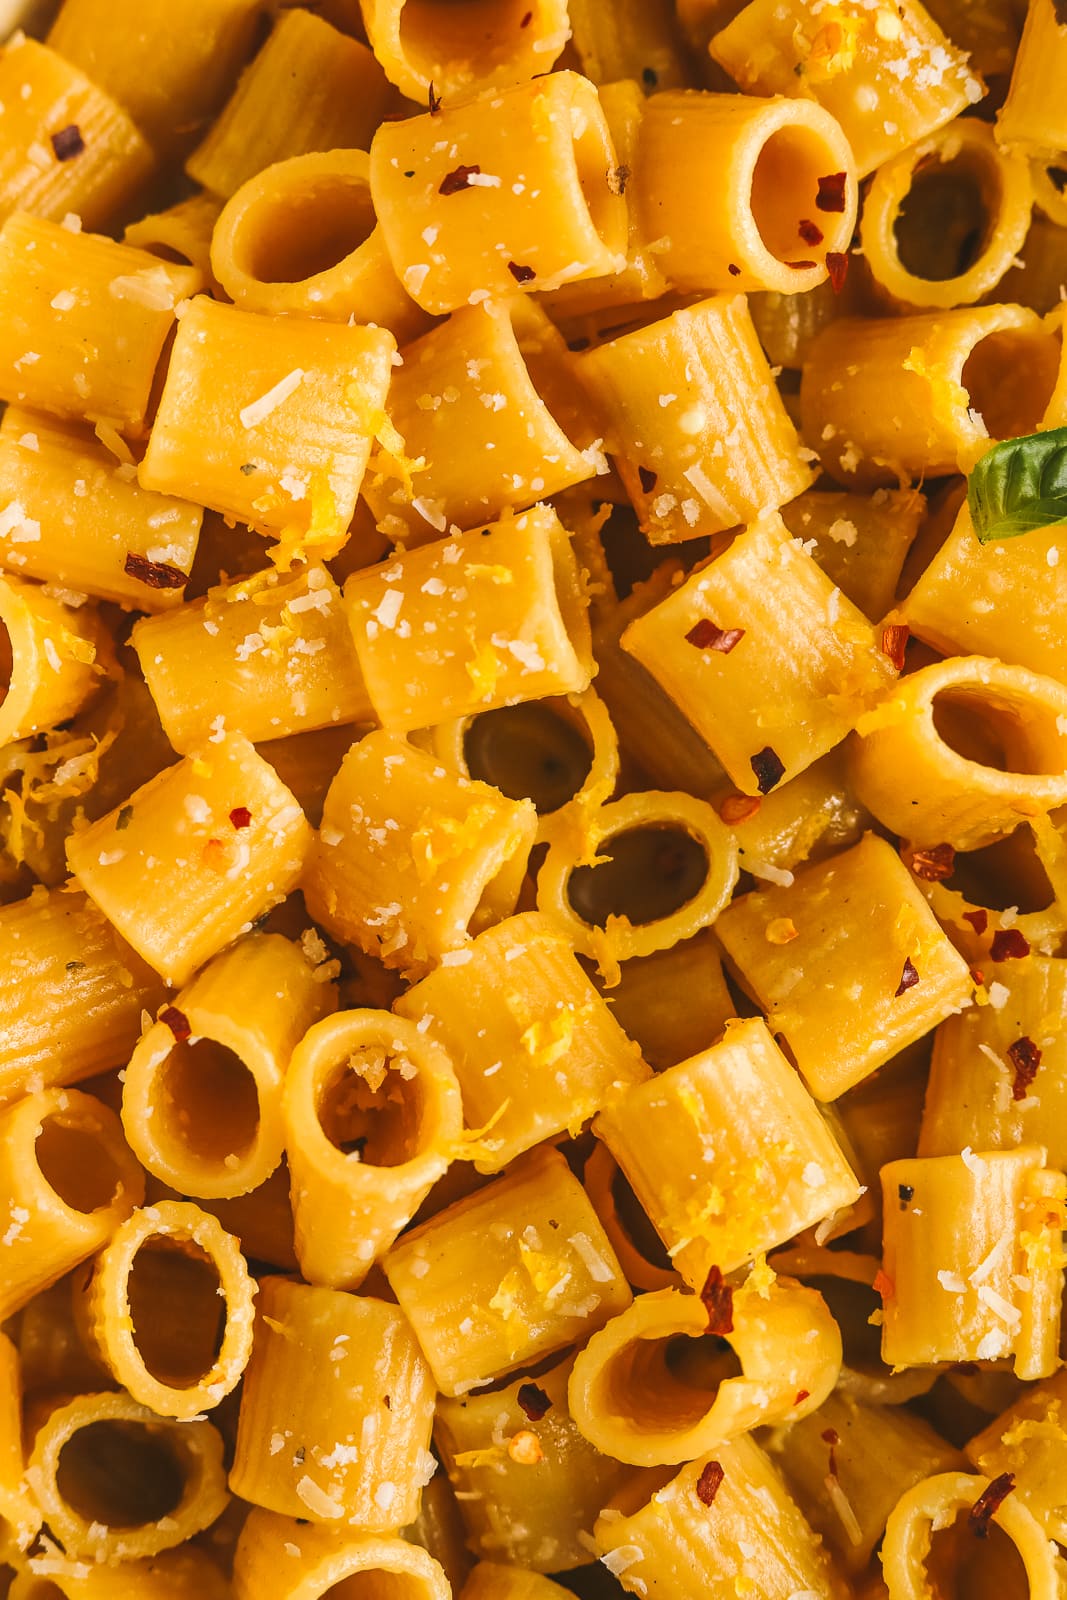 close-up of lemon garlic pasta noodles